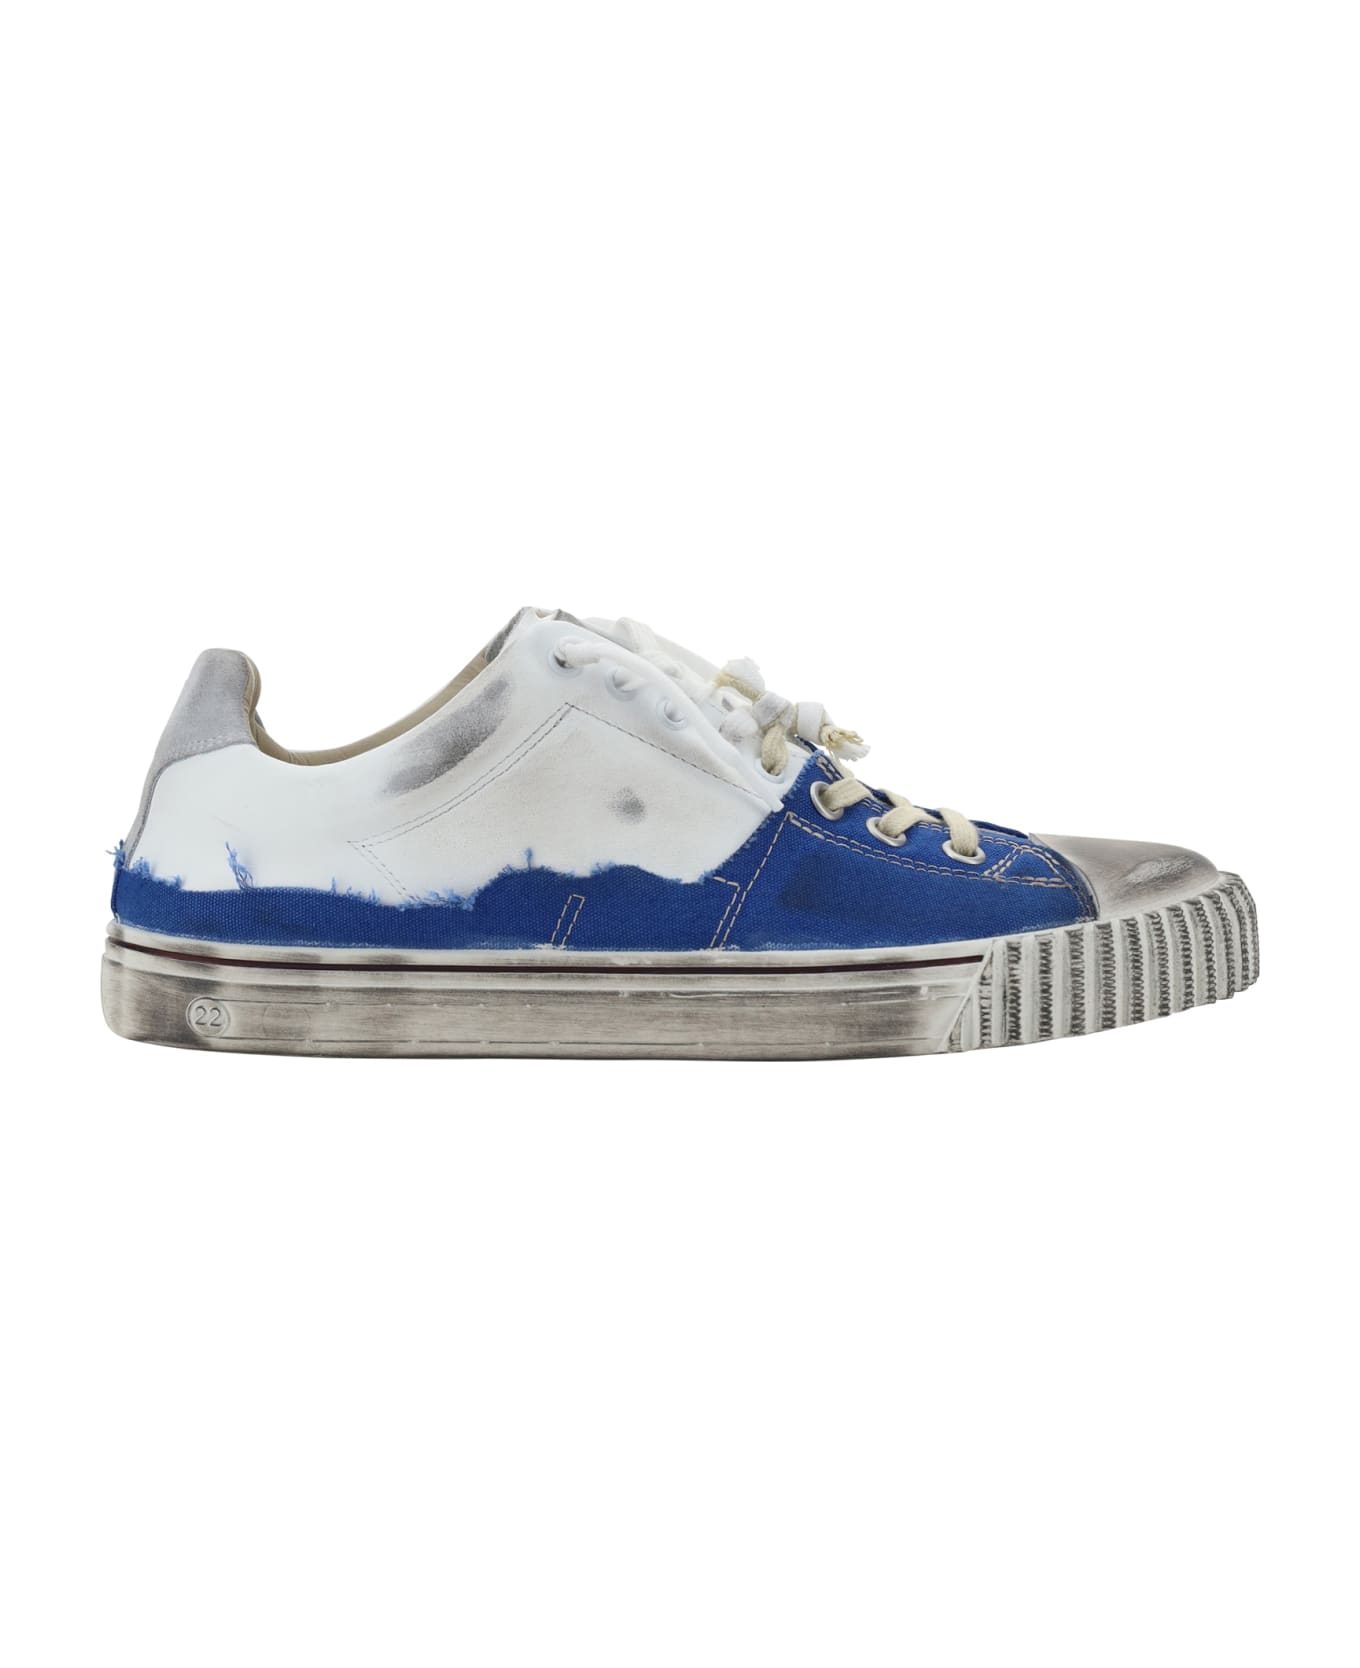 Maison Margiela New Evolution Sneakers - Blue/white